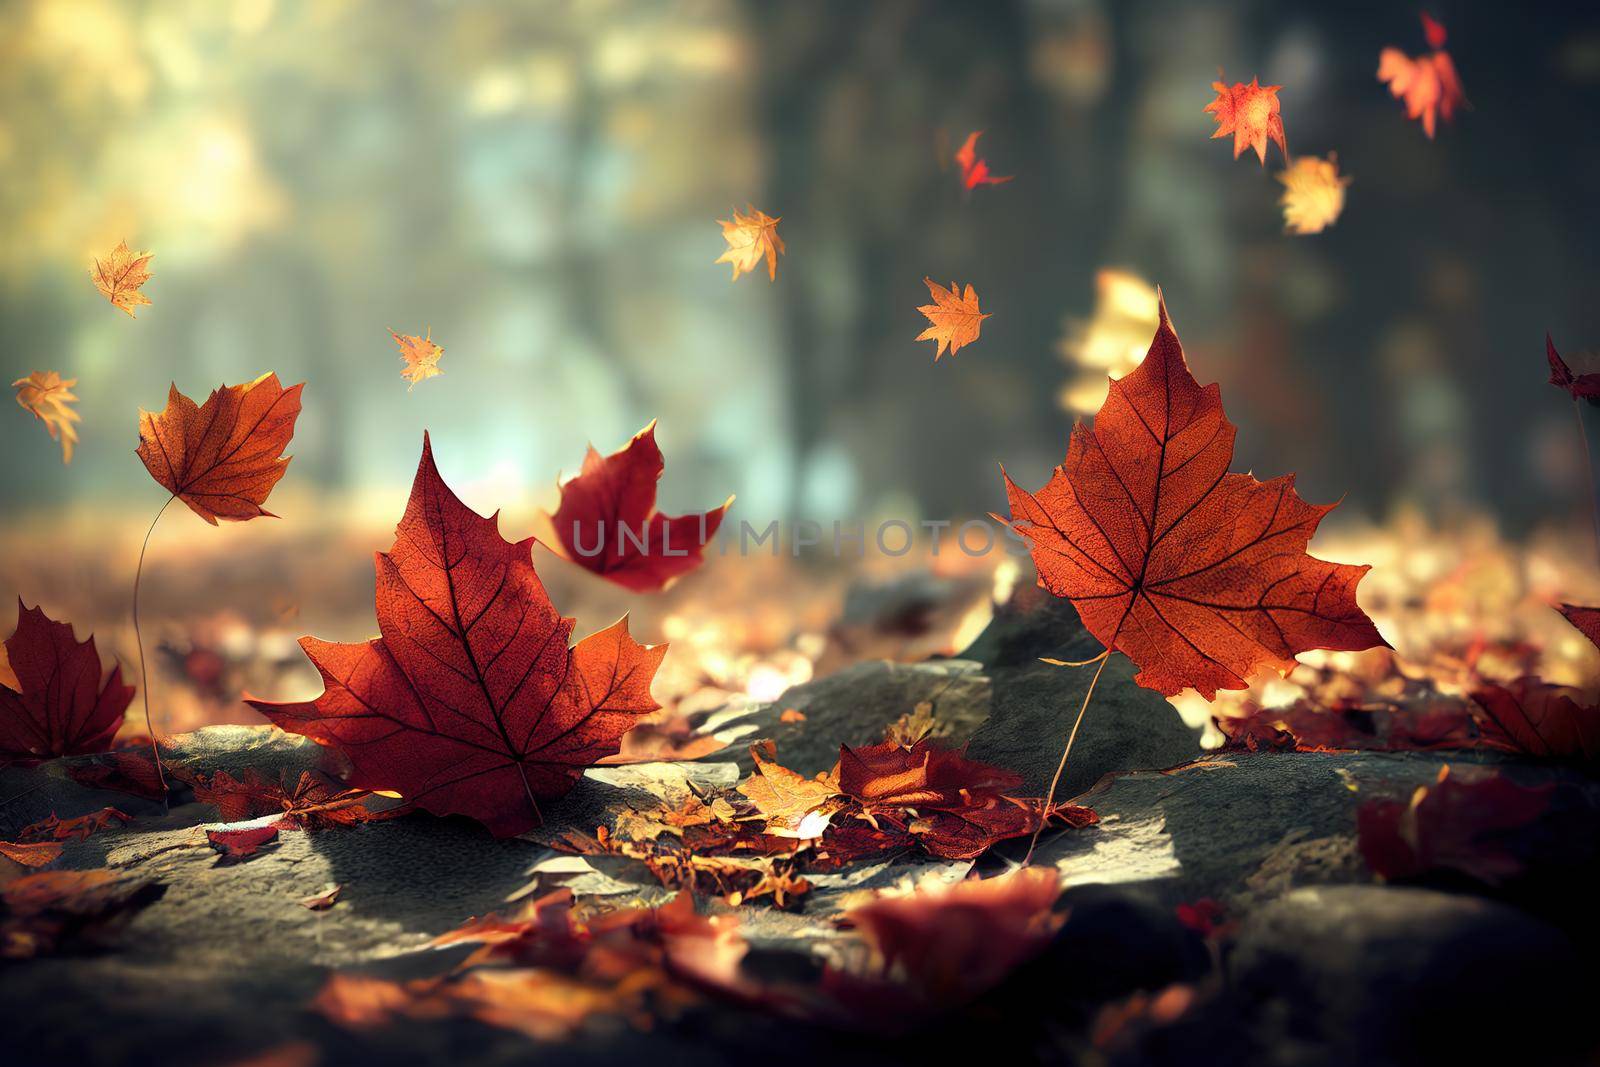 autumn leaves. High quality 3d illustration